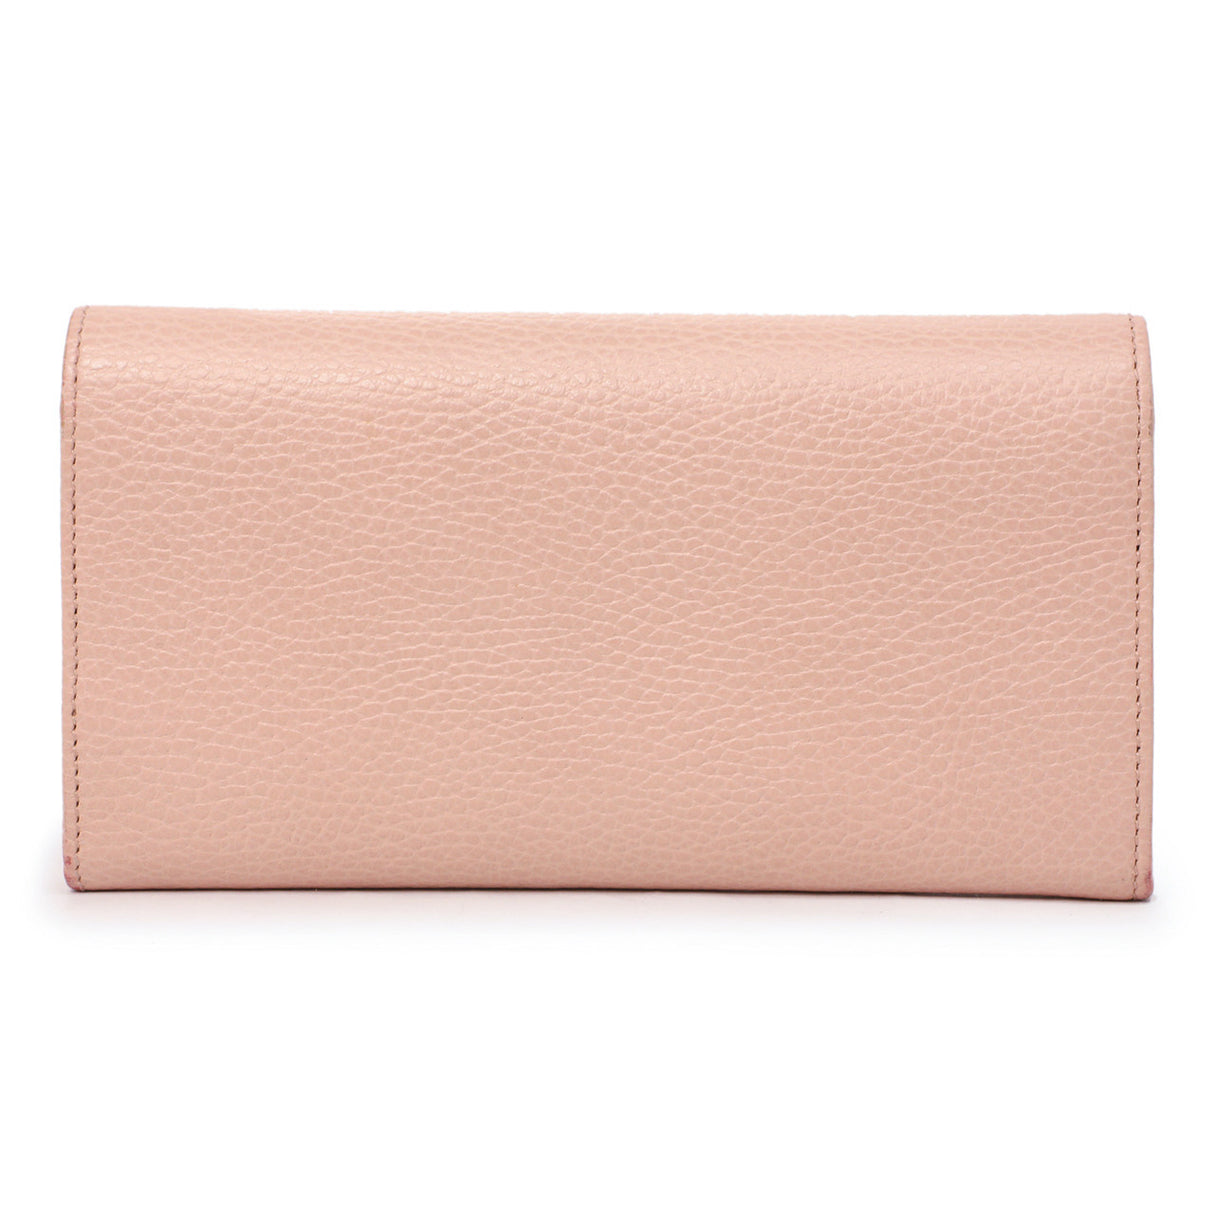 Gucci Pink Dollar Calfskin GG Marmont Continental Wallet